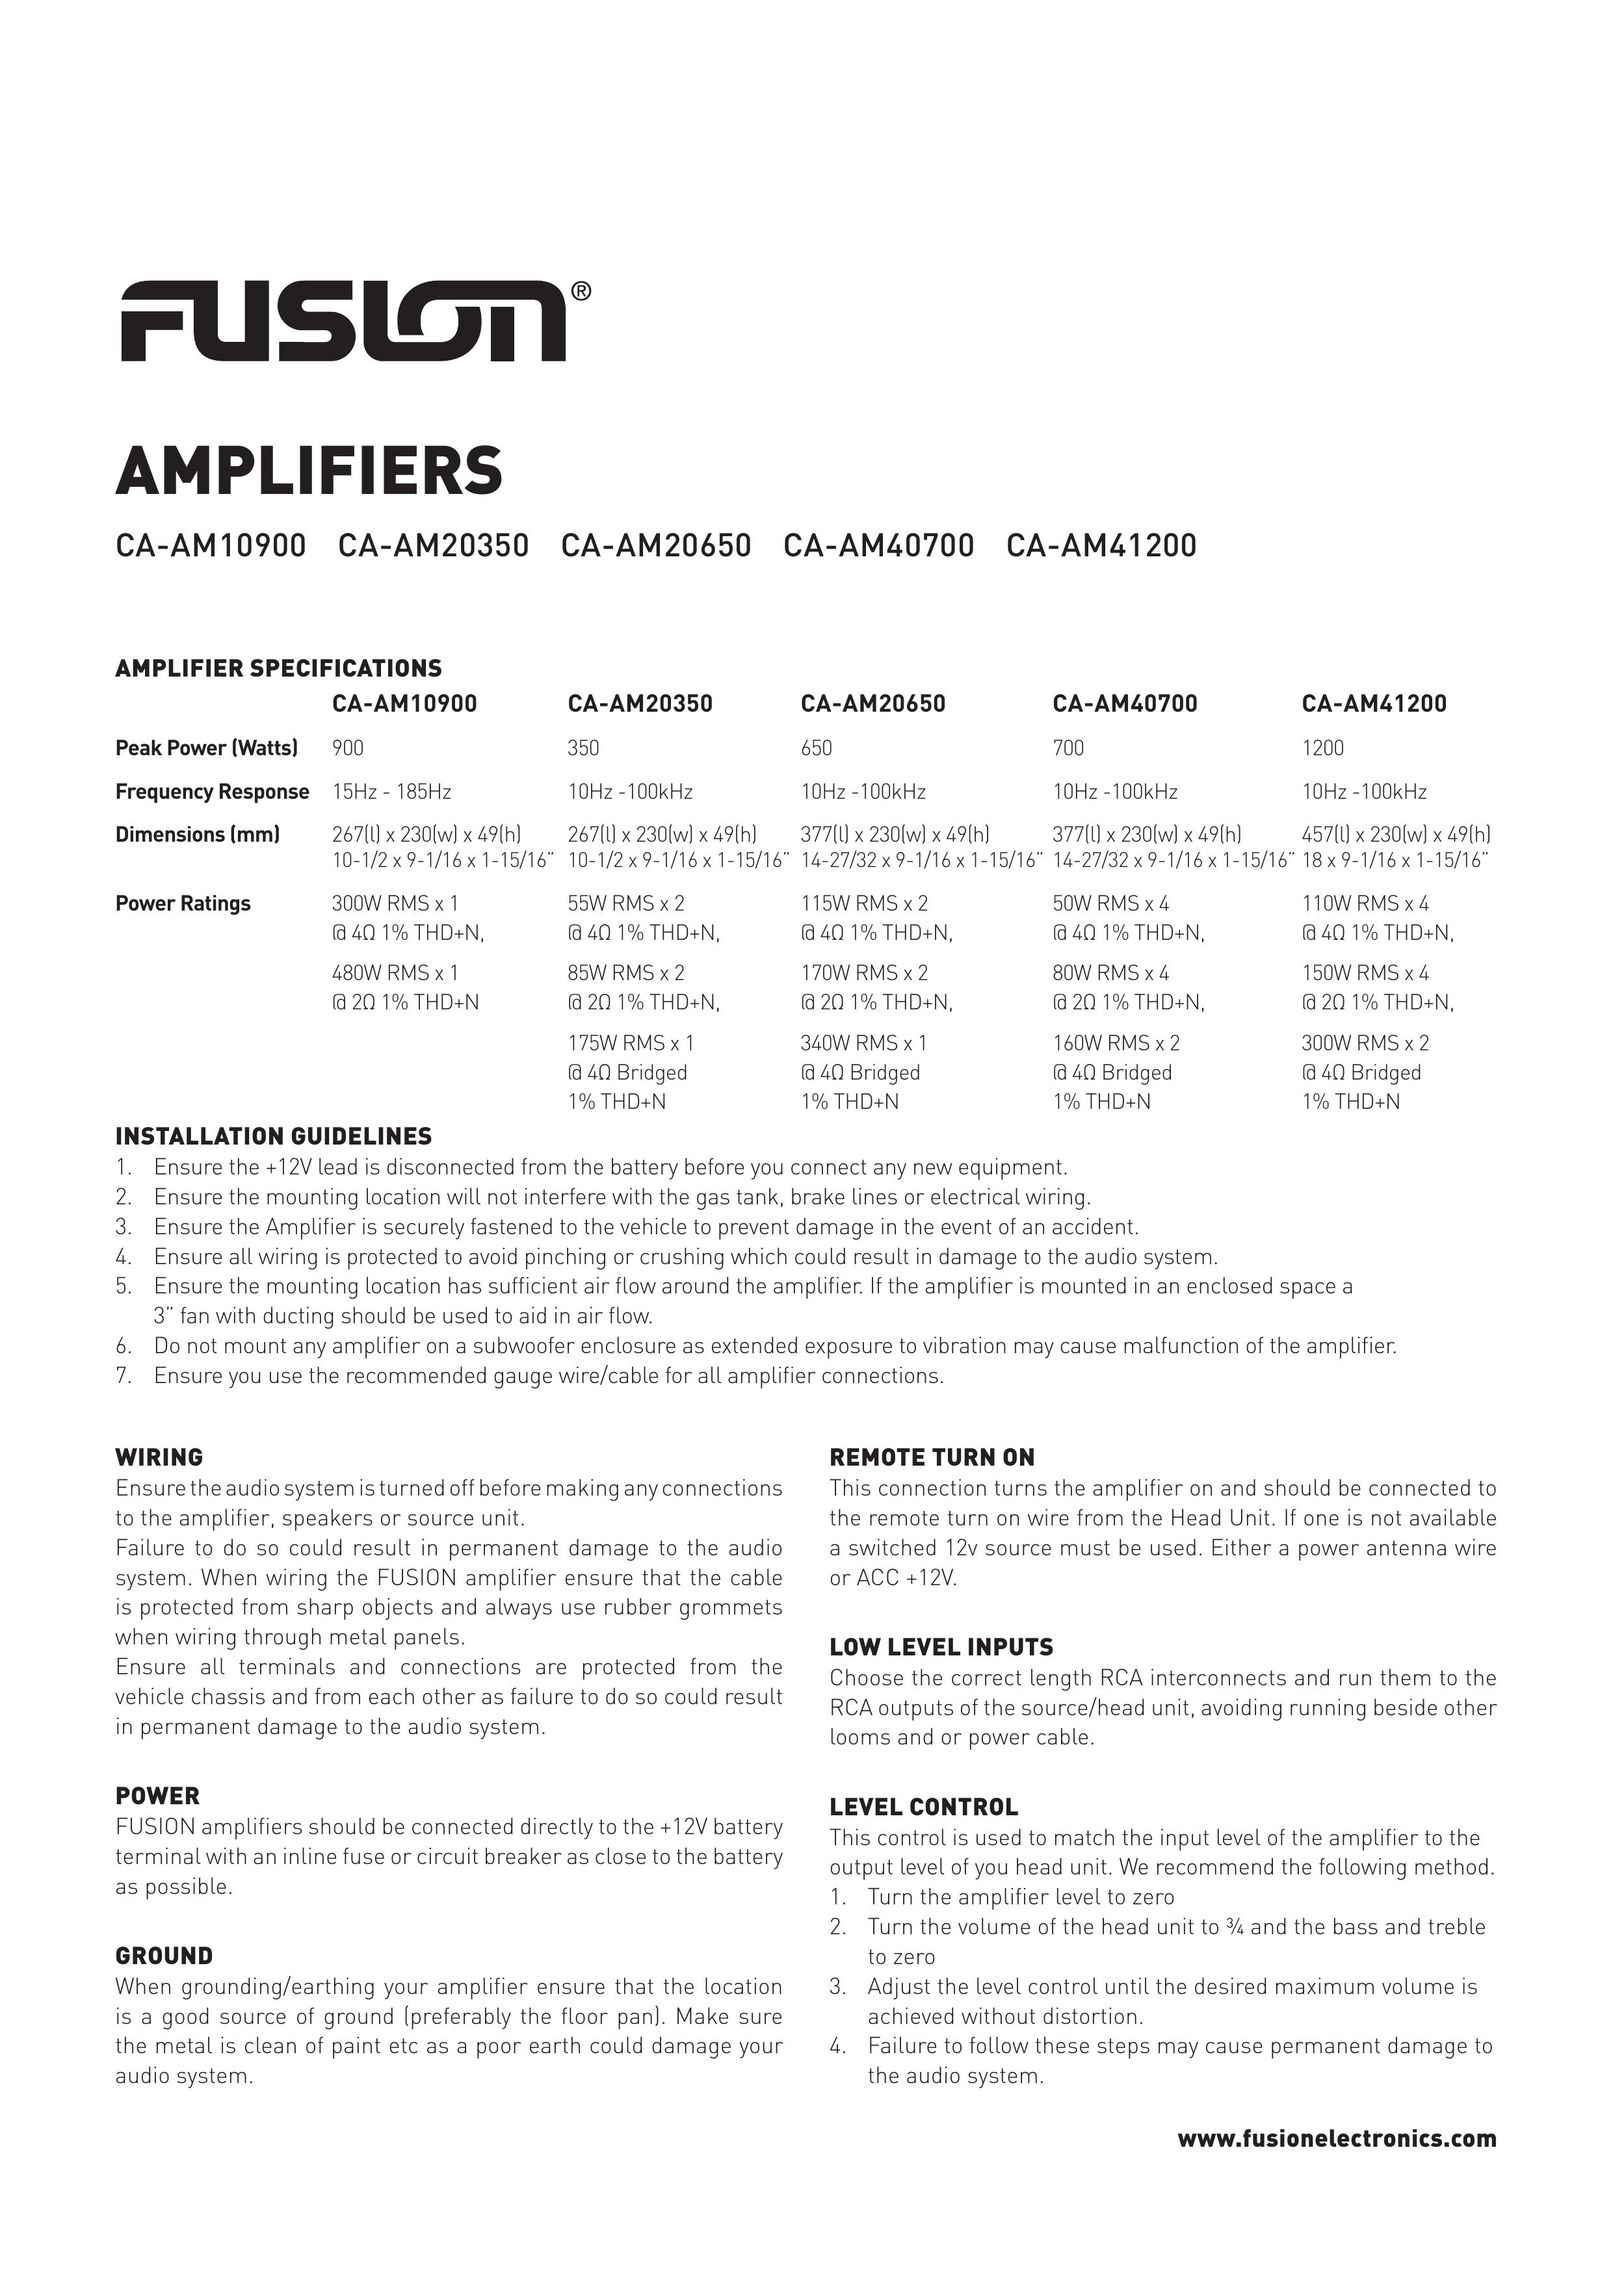 Fusion CA-AM41200 Car Amplifier User Manual